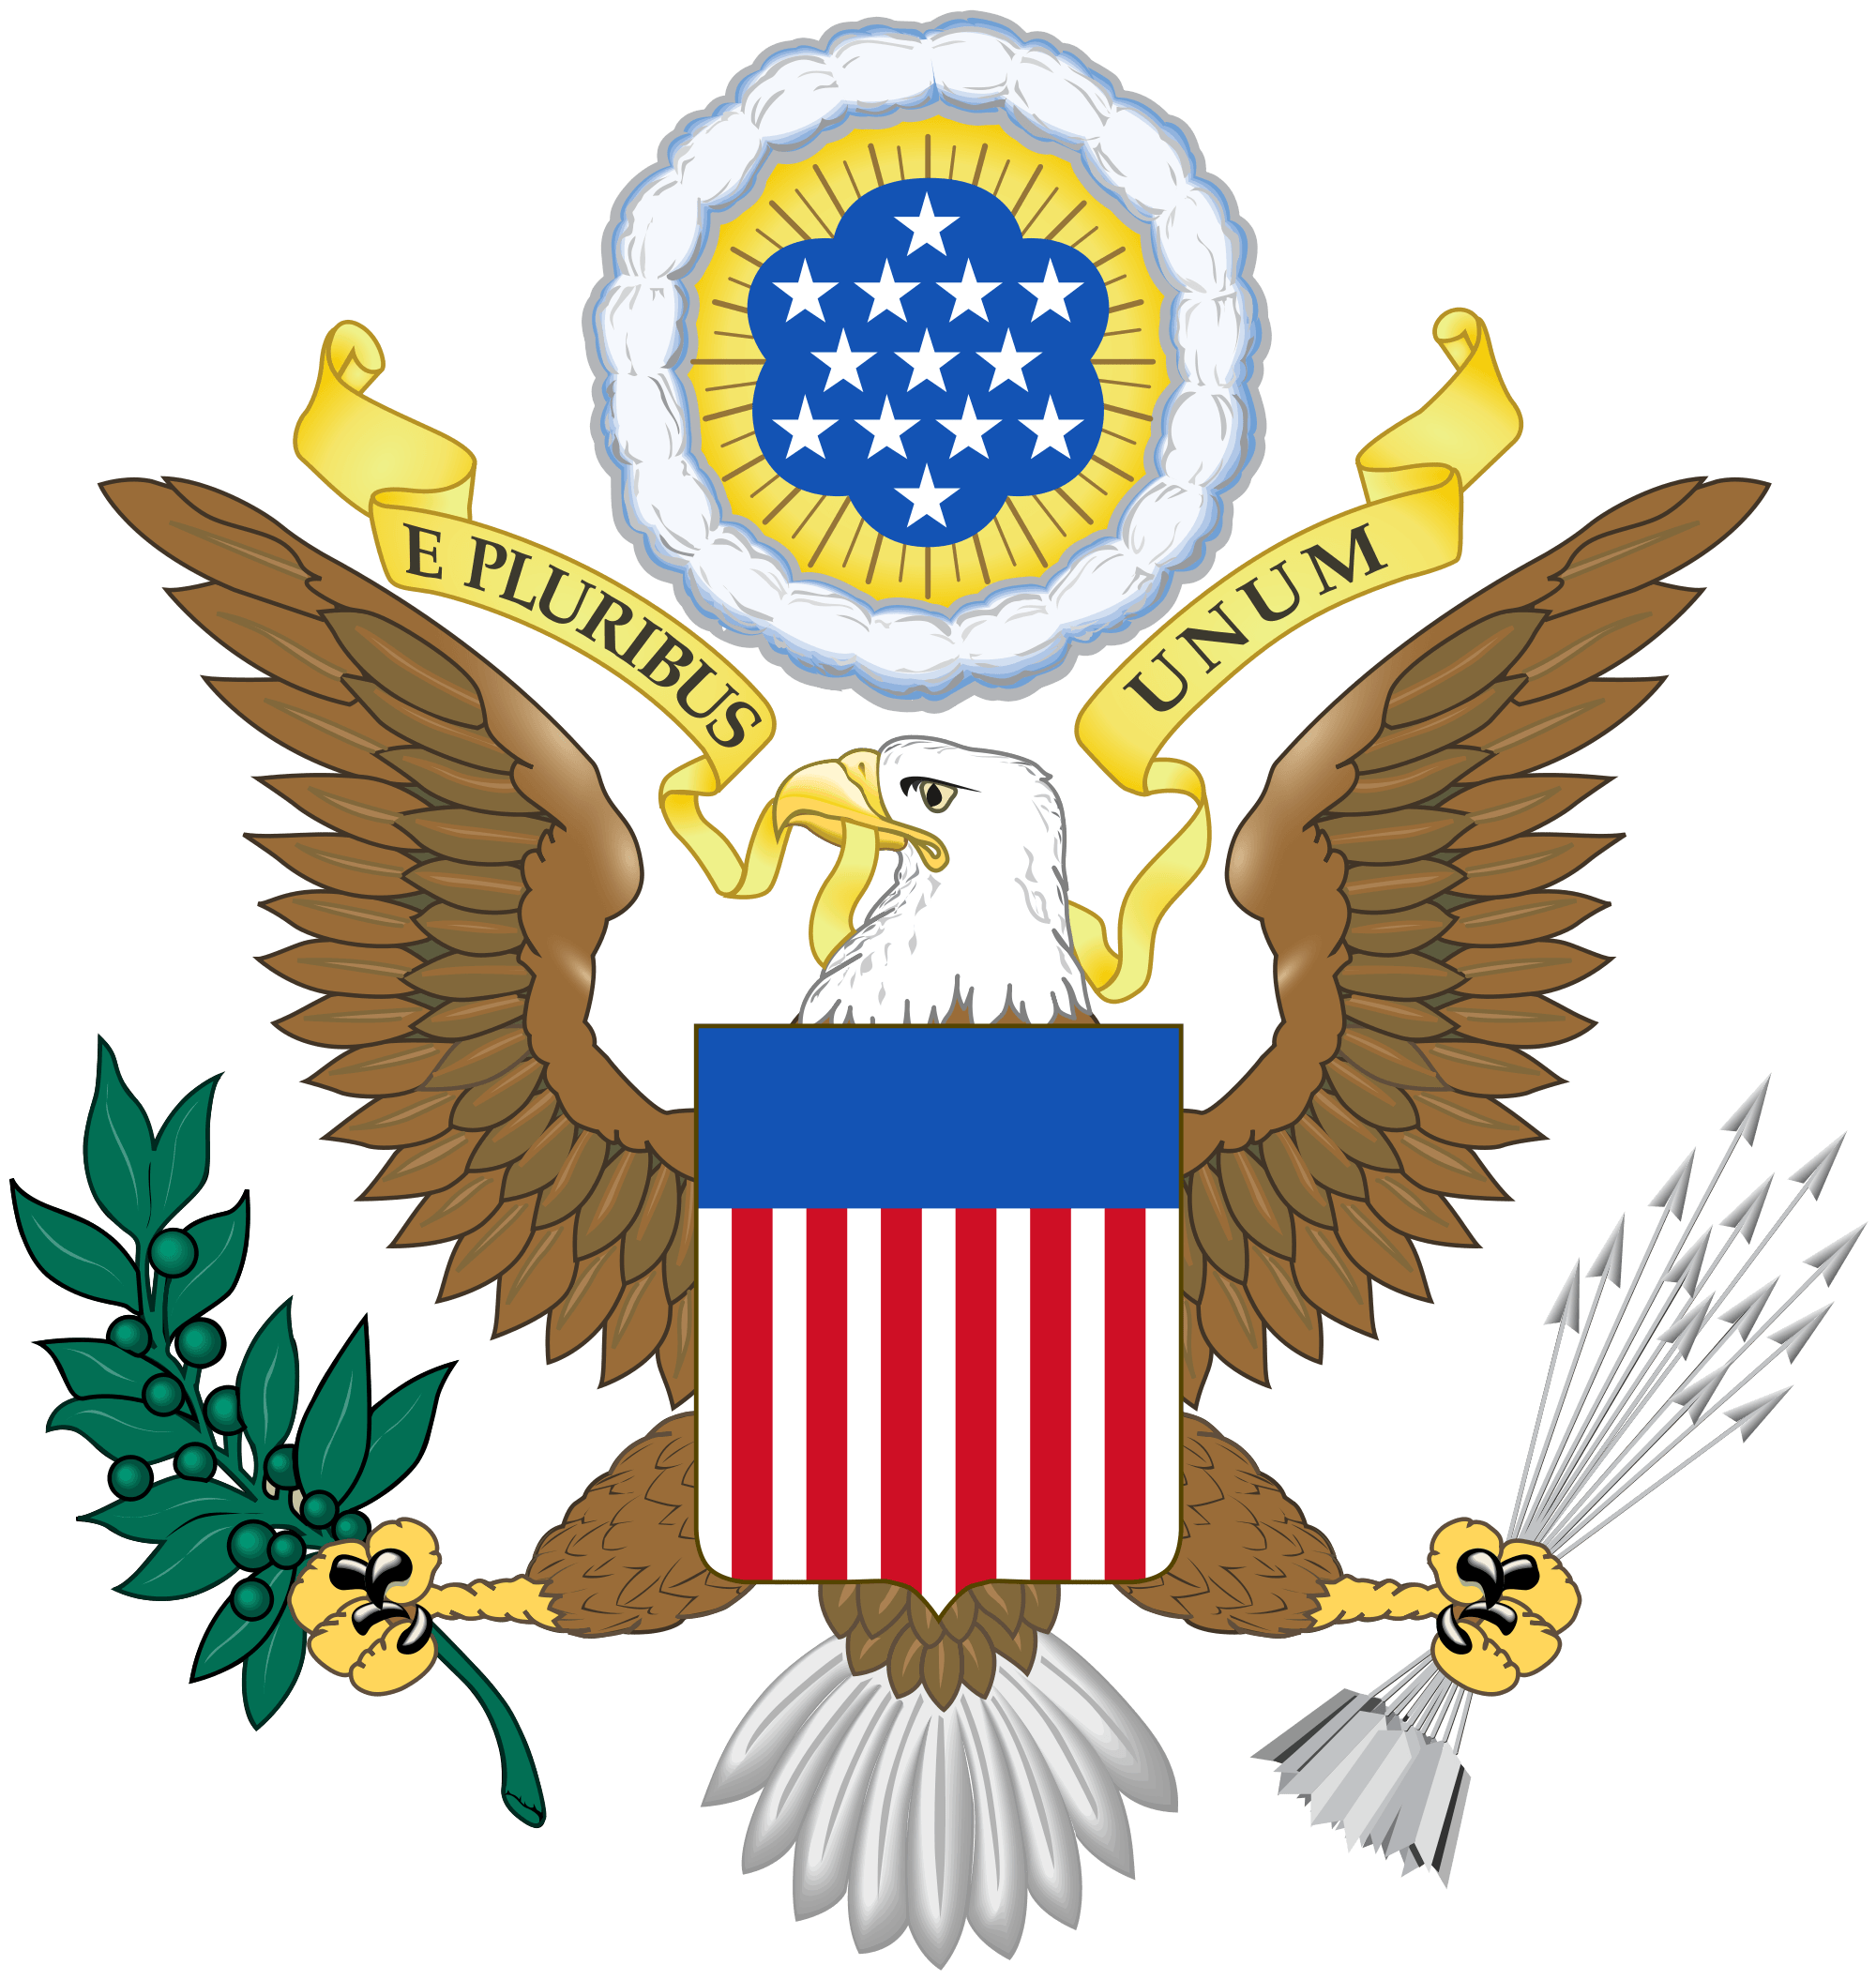 USA Eagle Logo - Great Seal of the United States